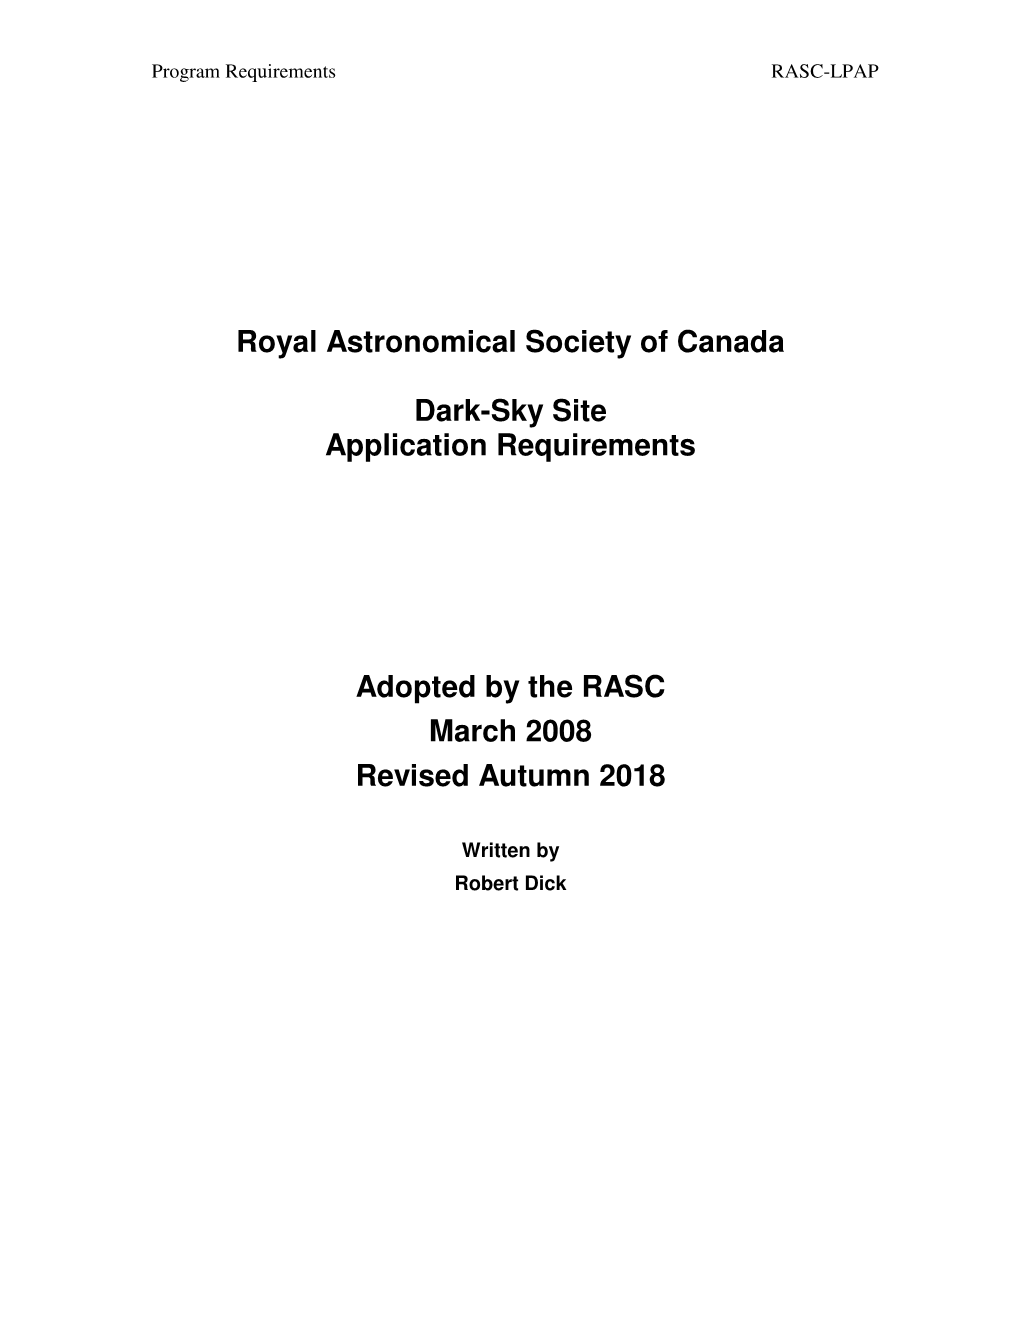 Royal Astronomical Society of Canada Dark-Sky Site Application